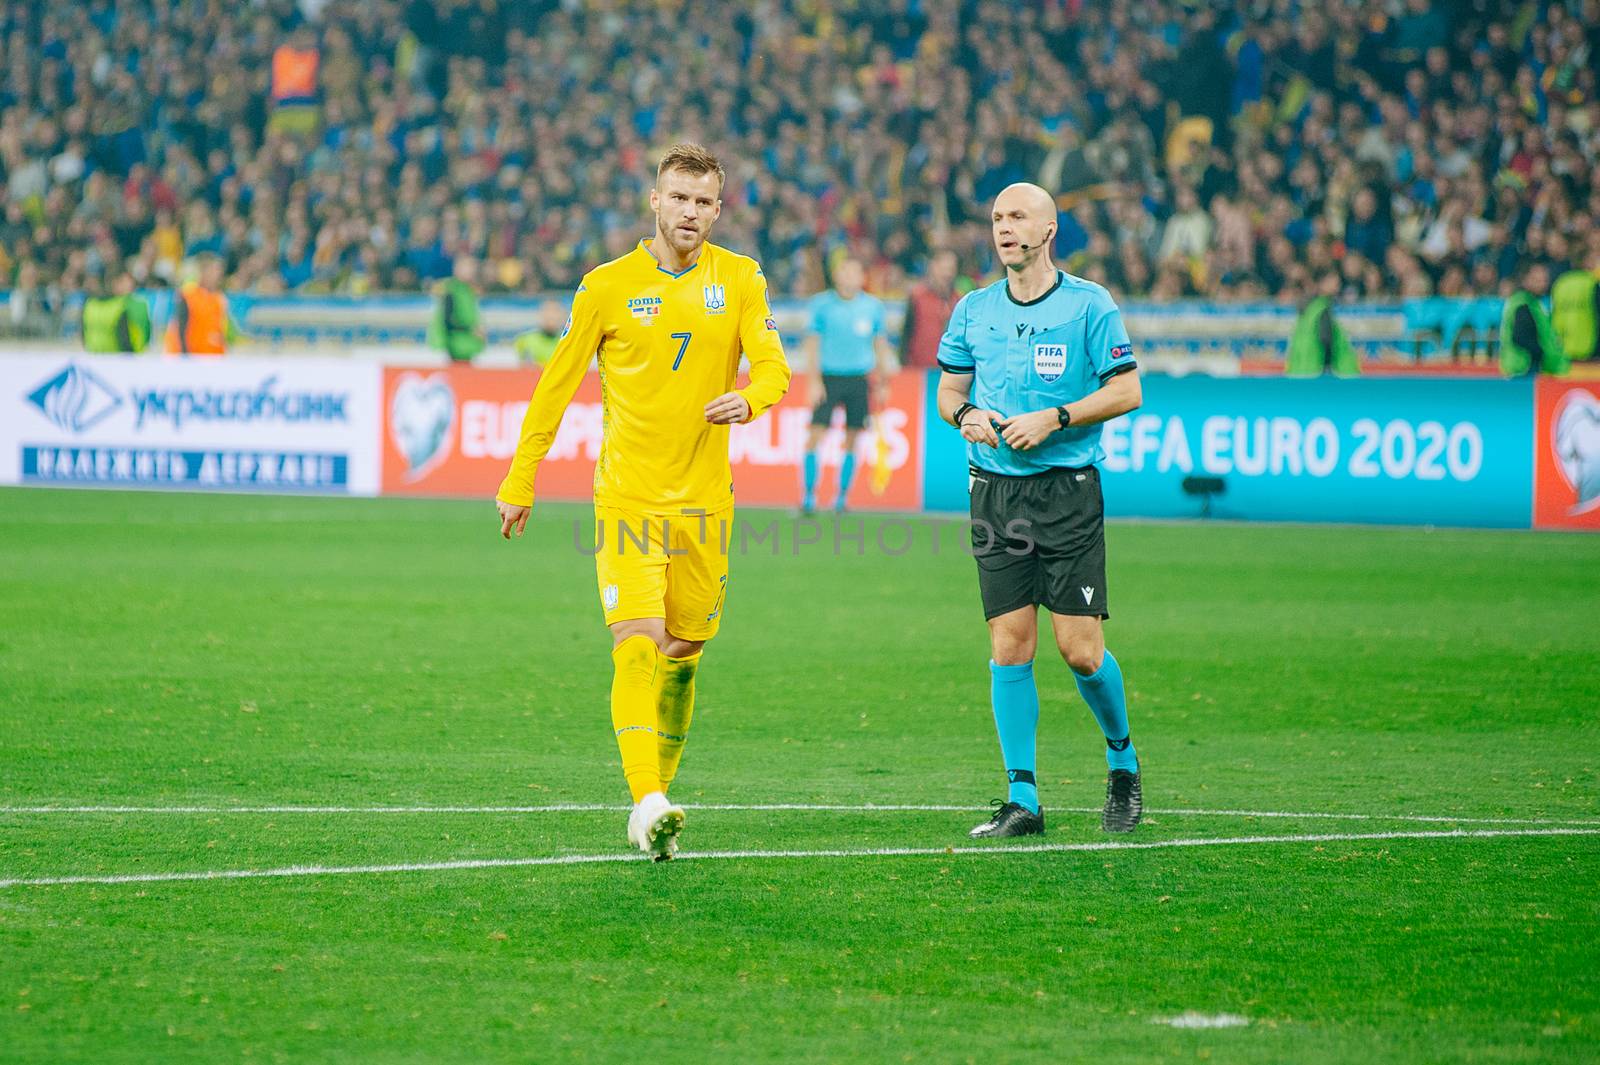 Kyiv, Ukraine - October 14, 2019: Andrey Yarmolenko during the match of qualify round Euro 2020 Ukraine vs Portugal at the Olympic Stadium